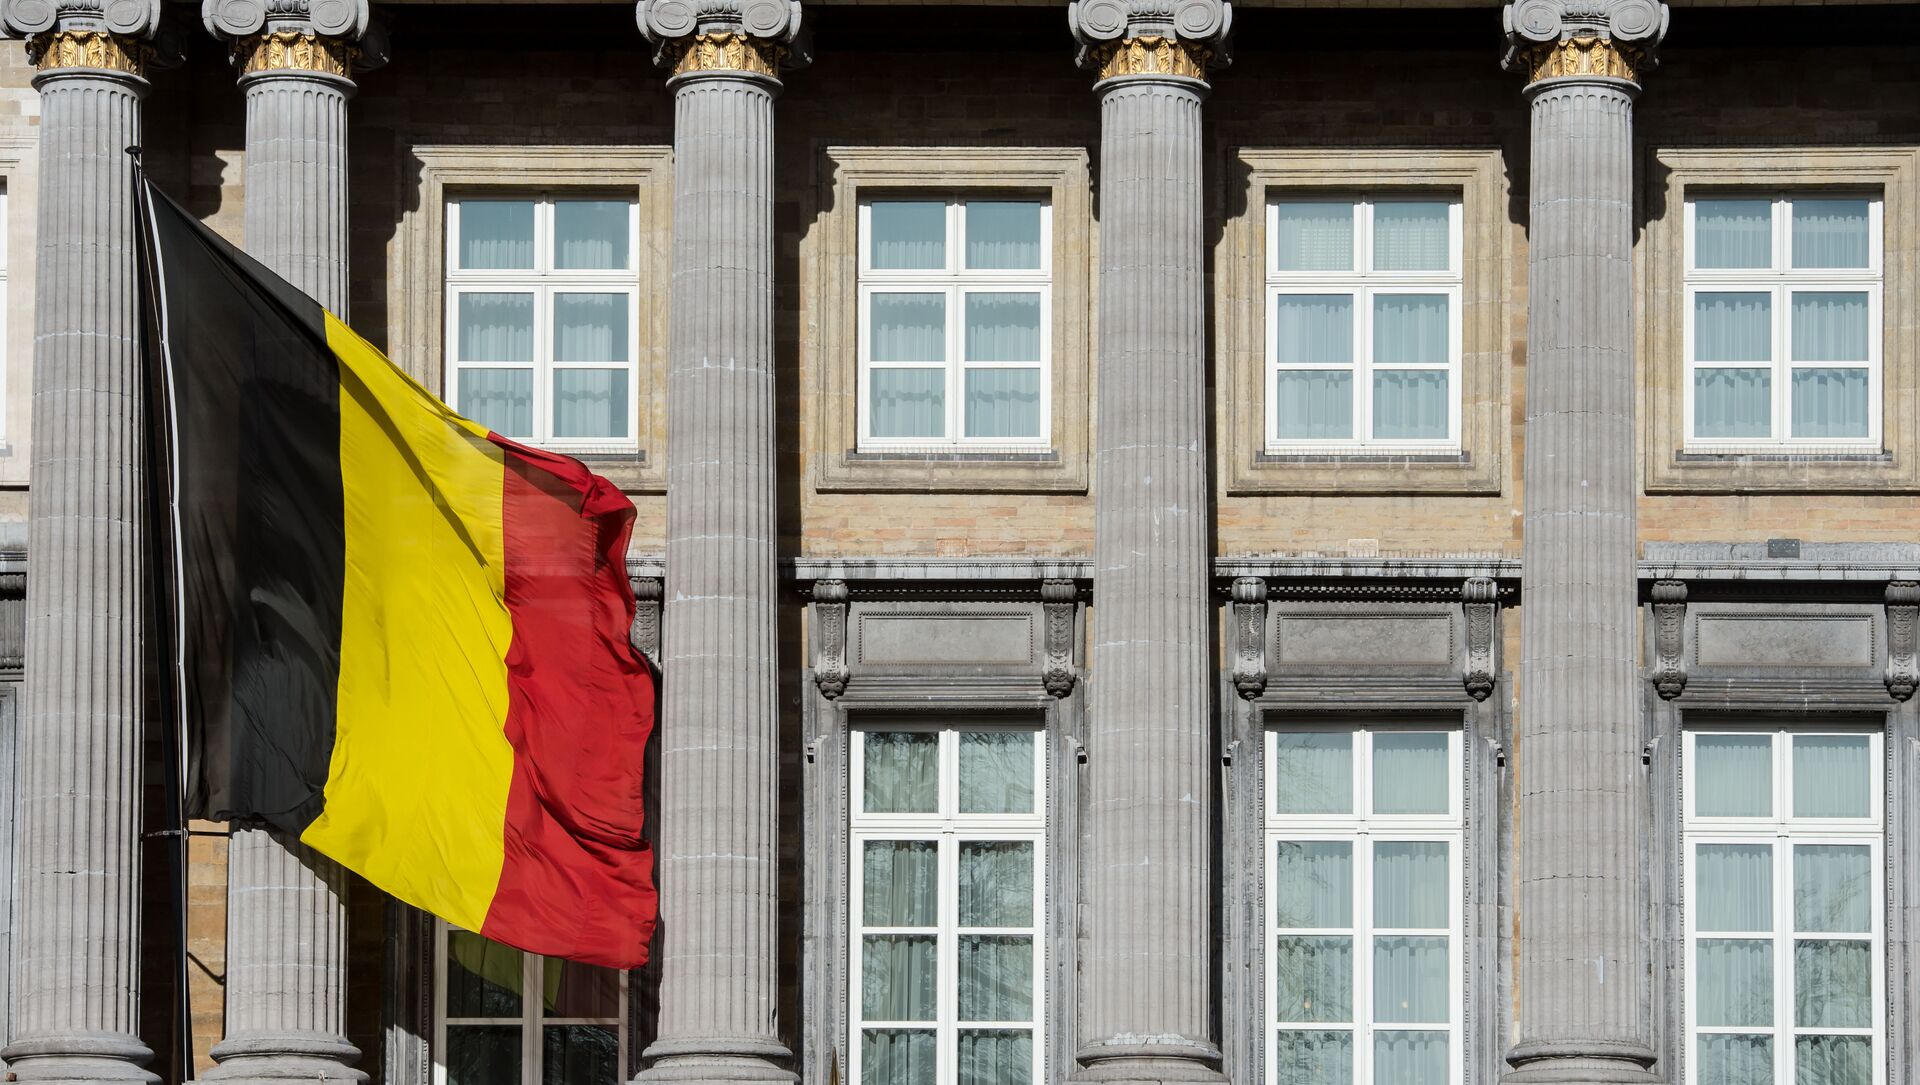 The Belgian flag flies outside the Belgian federal parliament in Brussels. (File) - Sputnik International, 1920, 04.05.2021